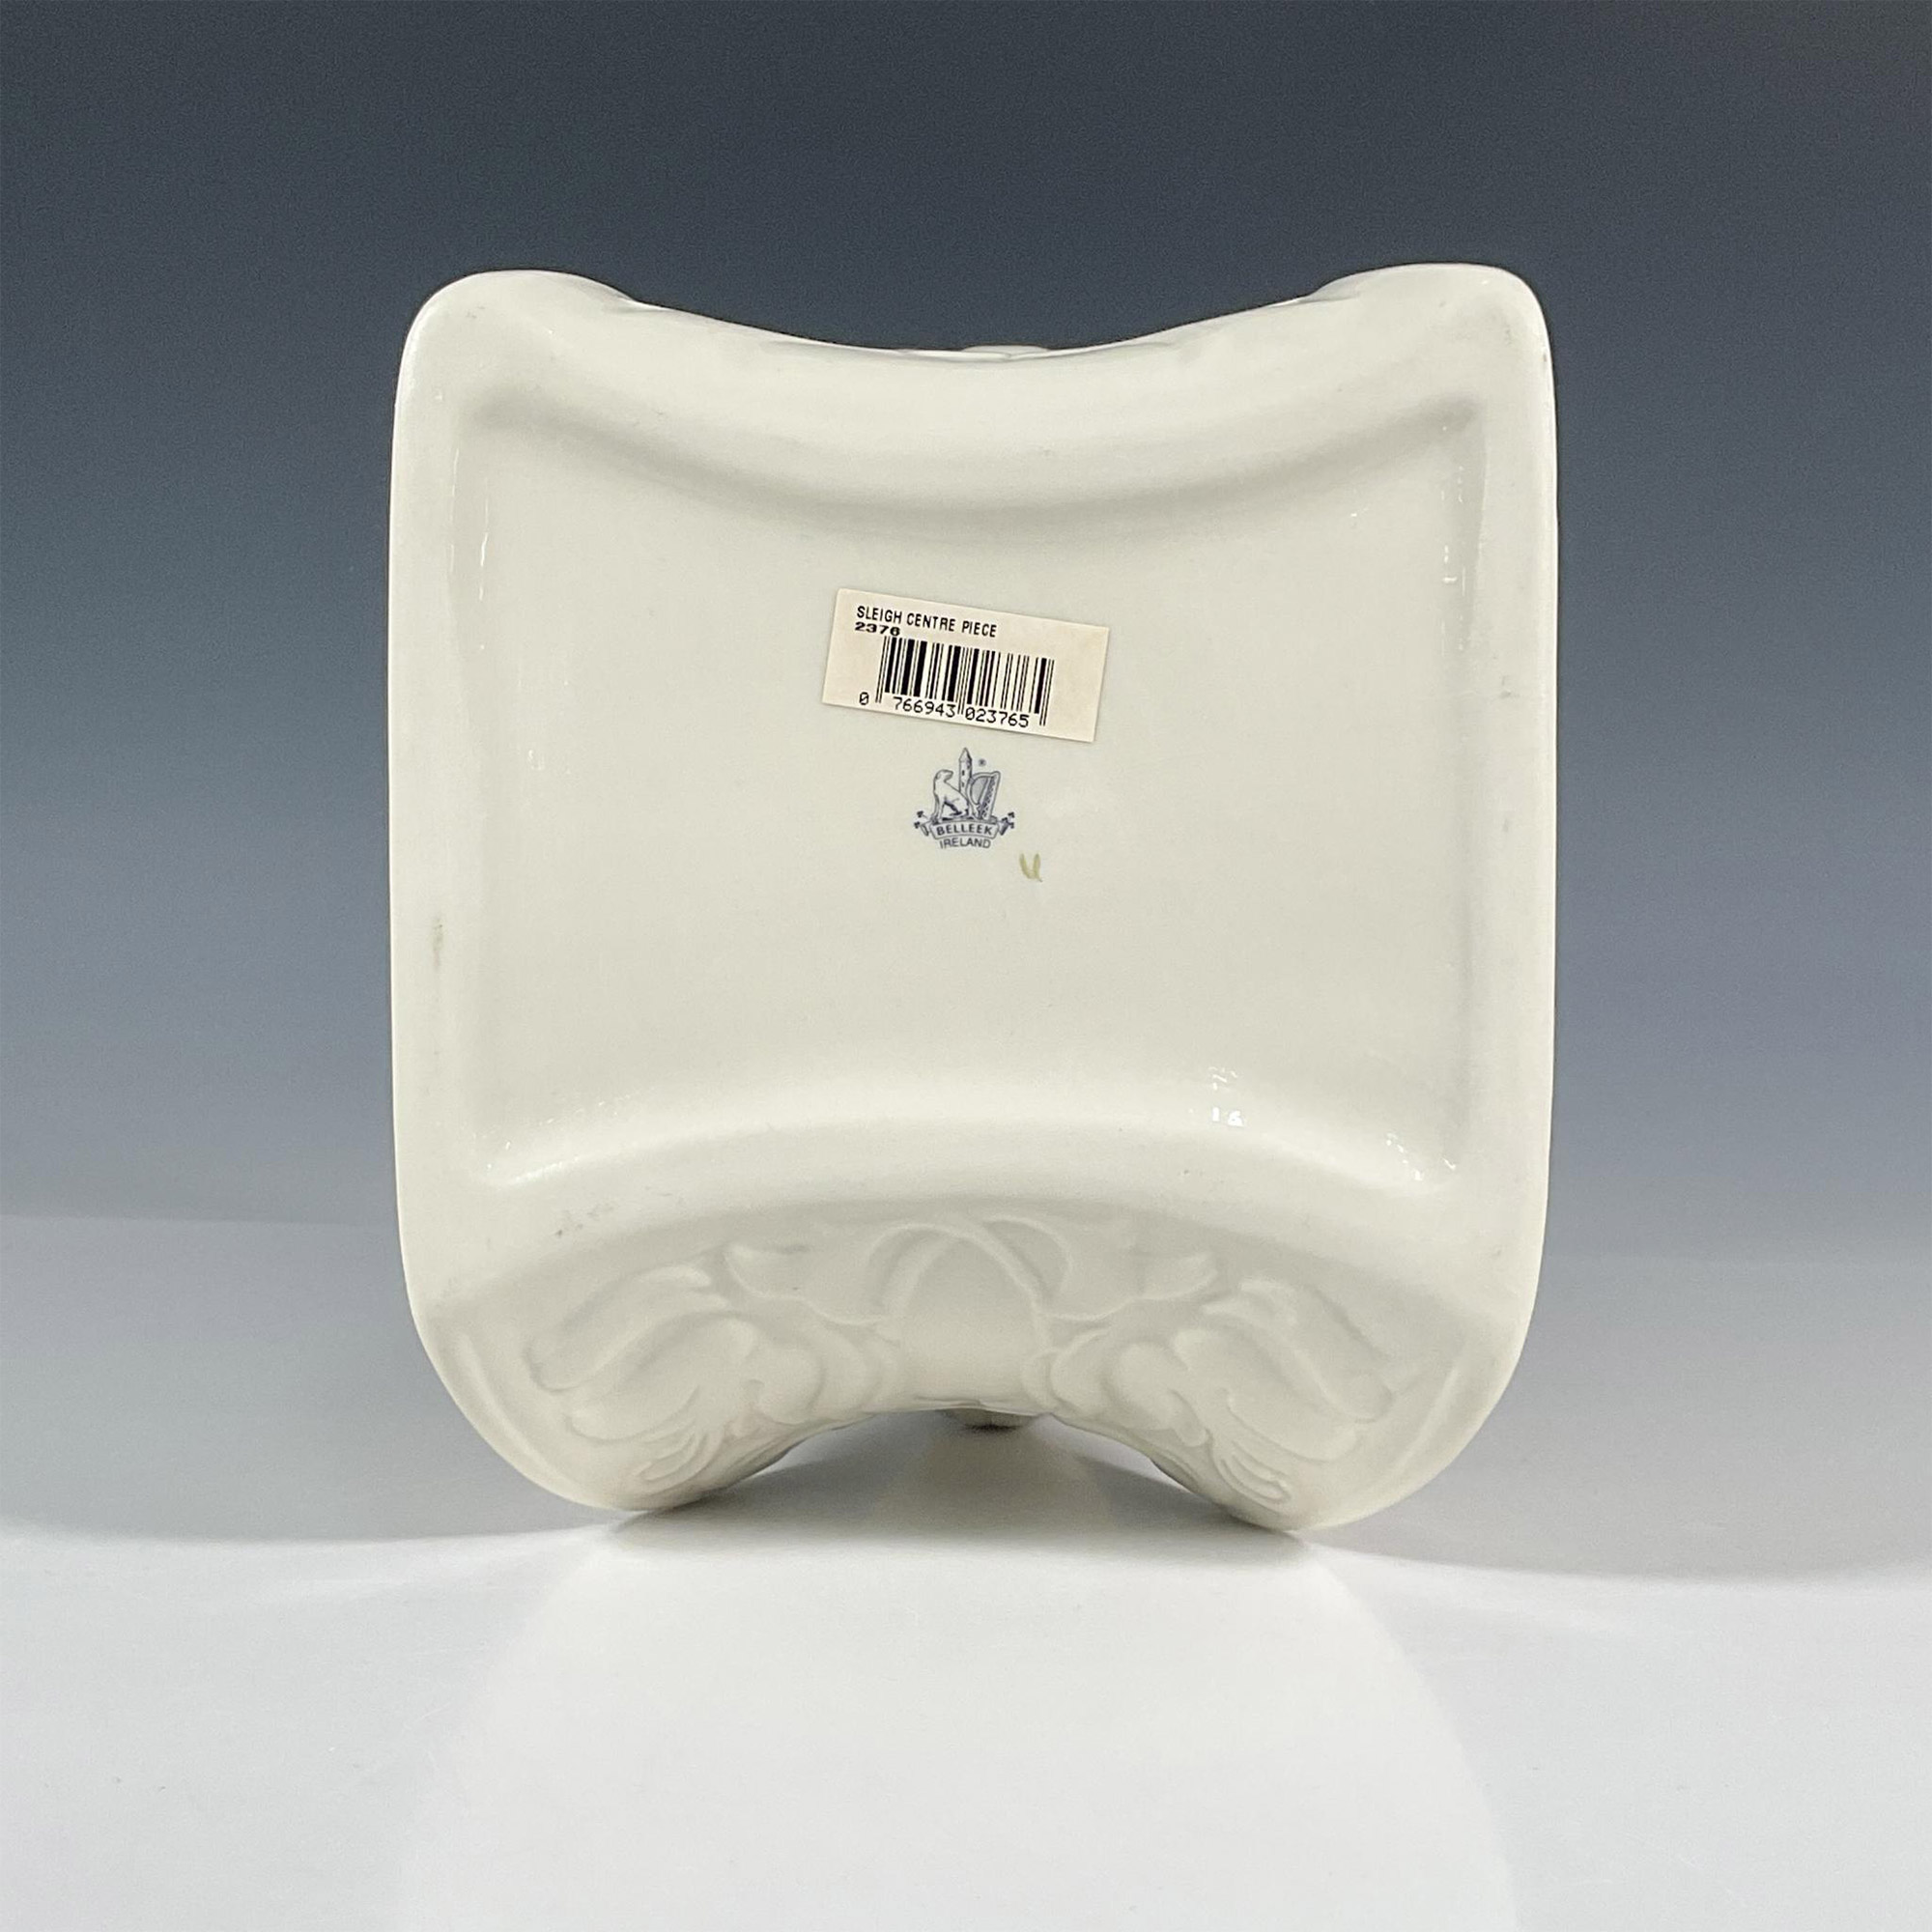 Belleek Pottery Porcelain Sleigh Centerpiece, Shamrock - Image 5 of 5